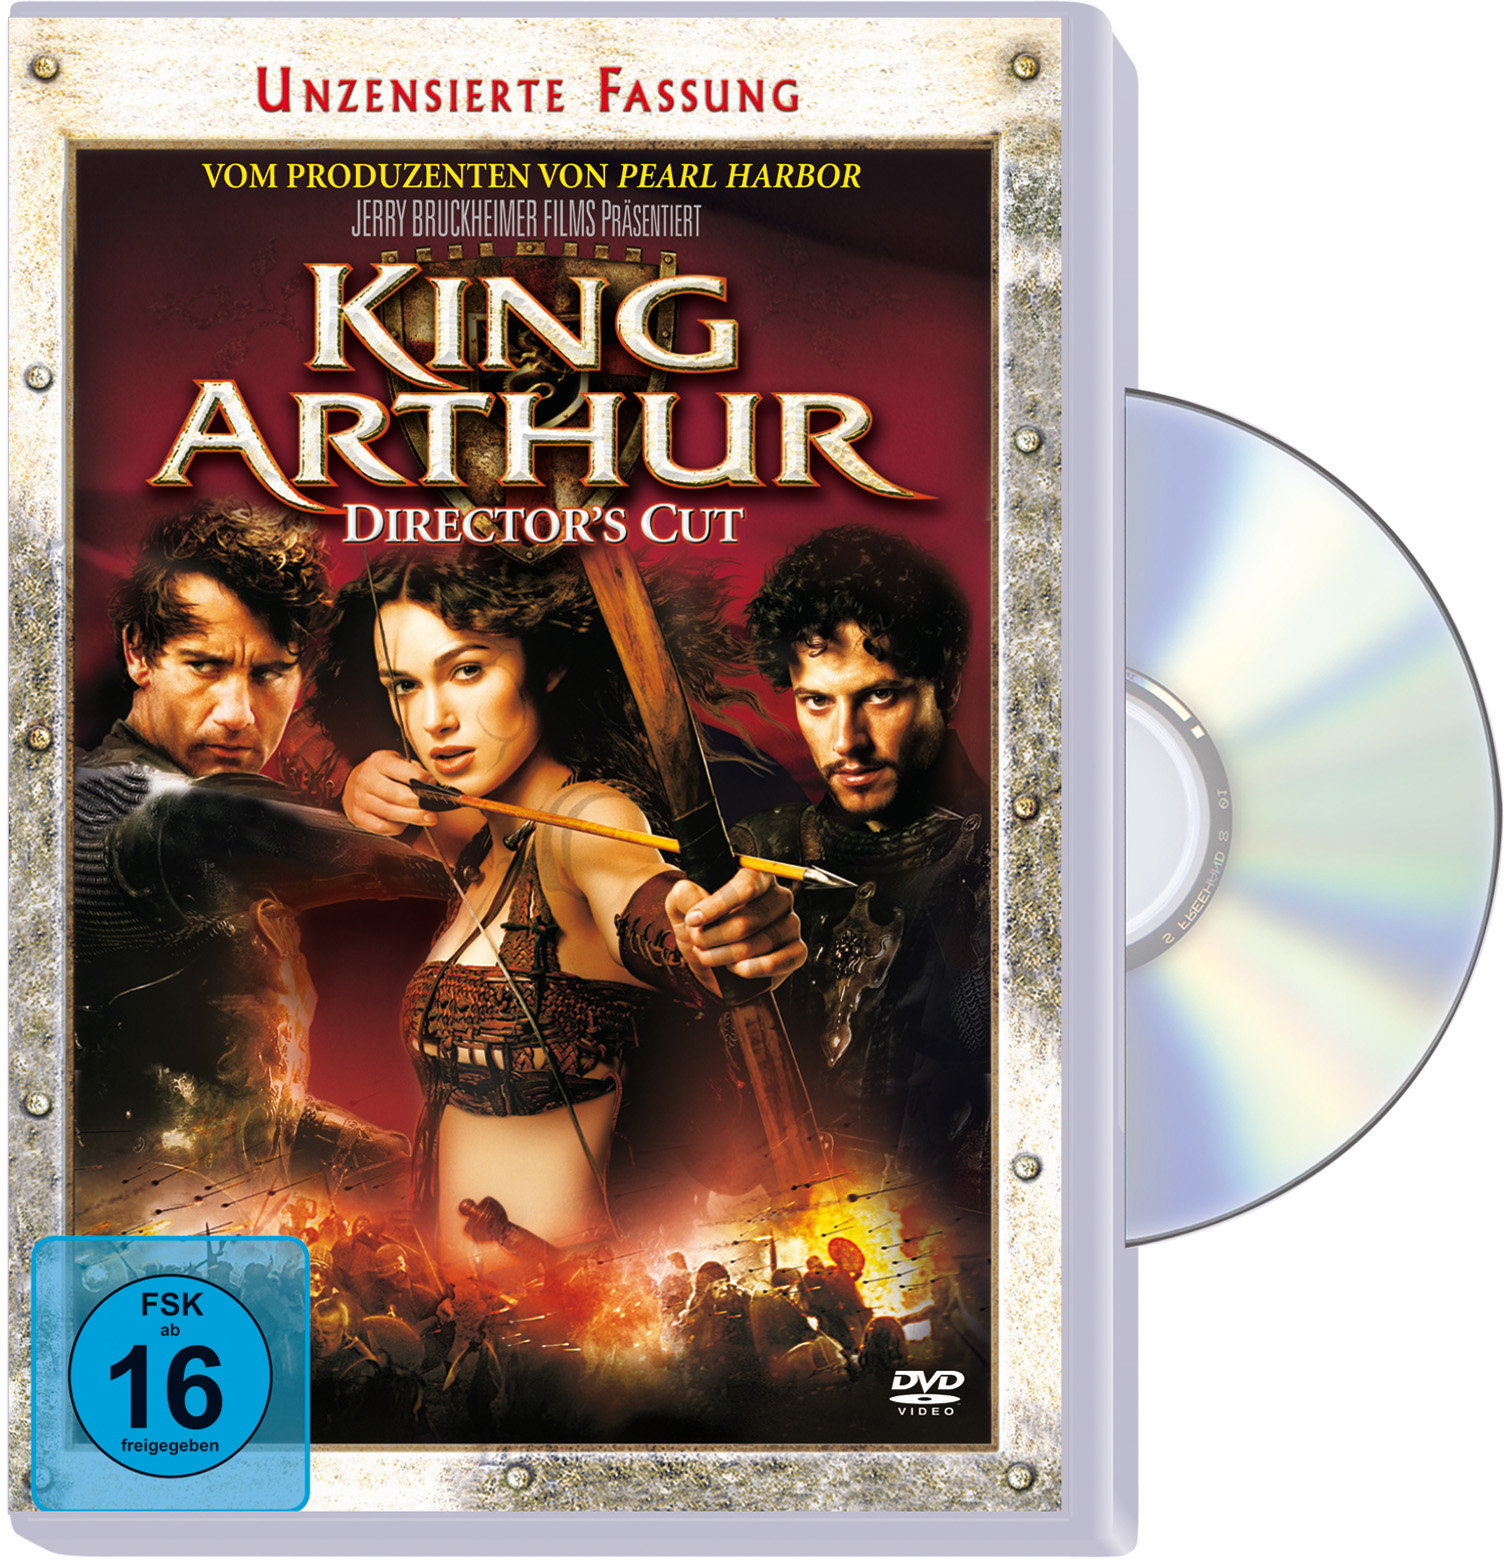 King Arthur (Director’s Cut) DVD